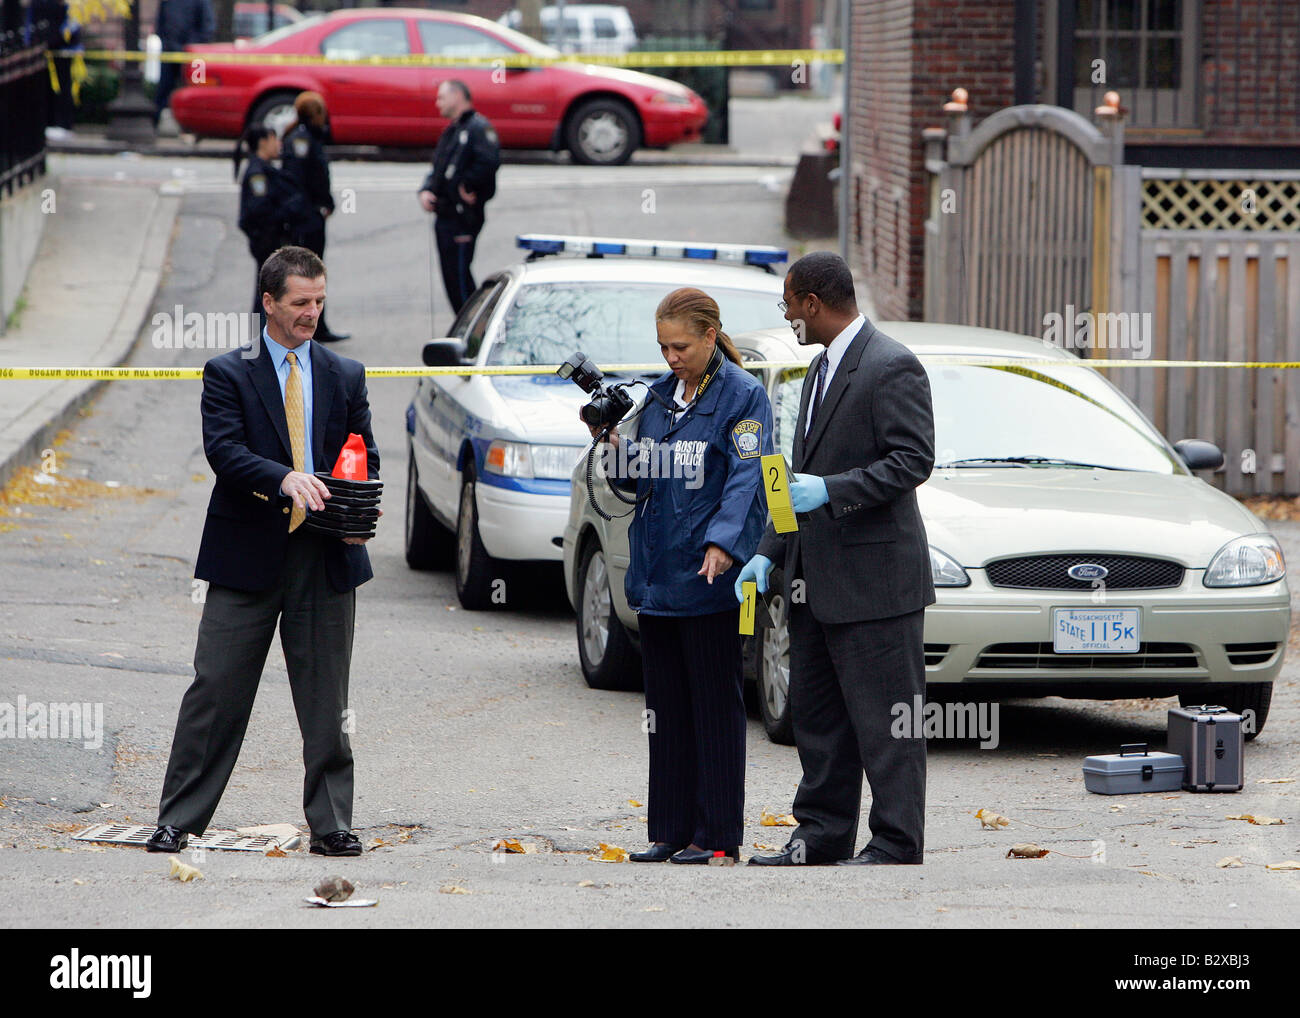 Police investigate a murder crime scene on a city street, Boston, Massahcusetts Stock Photo